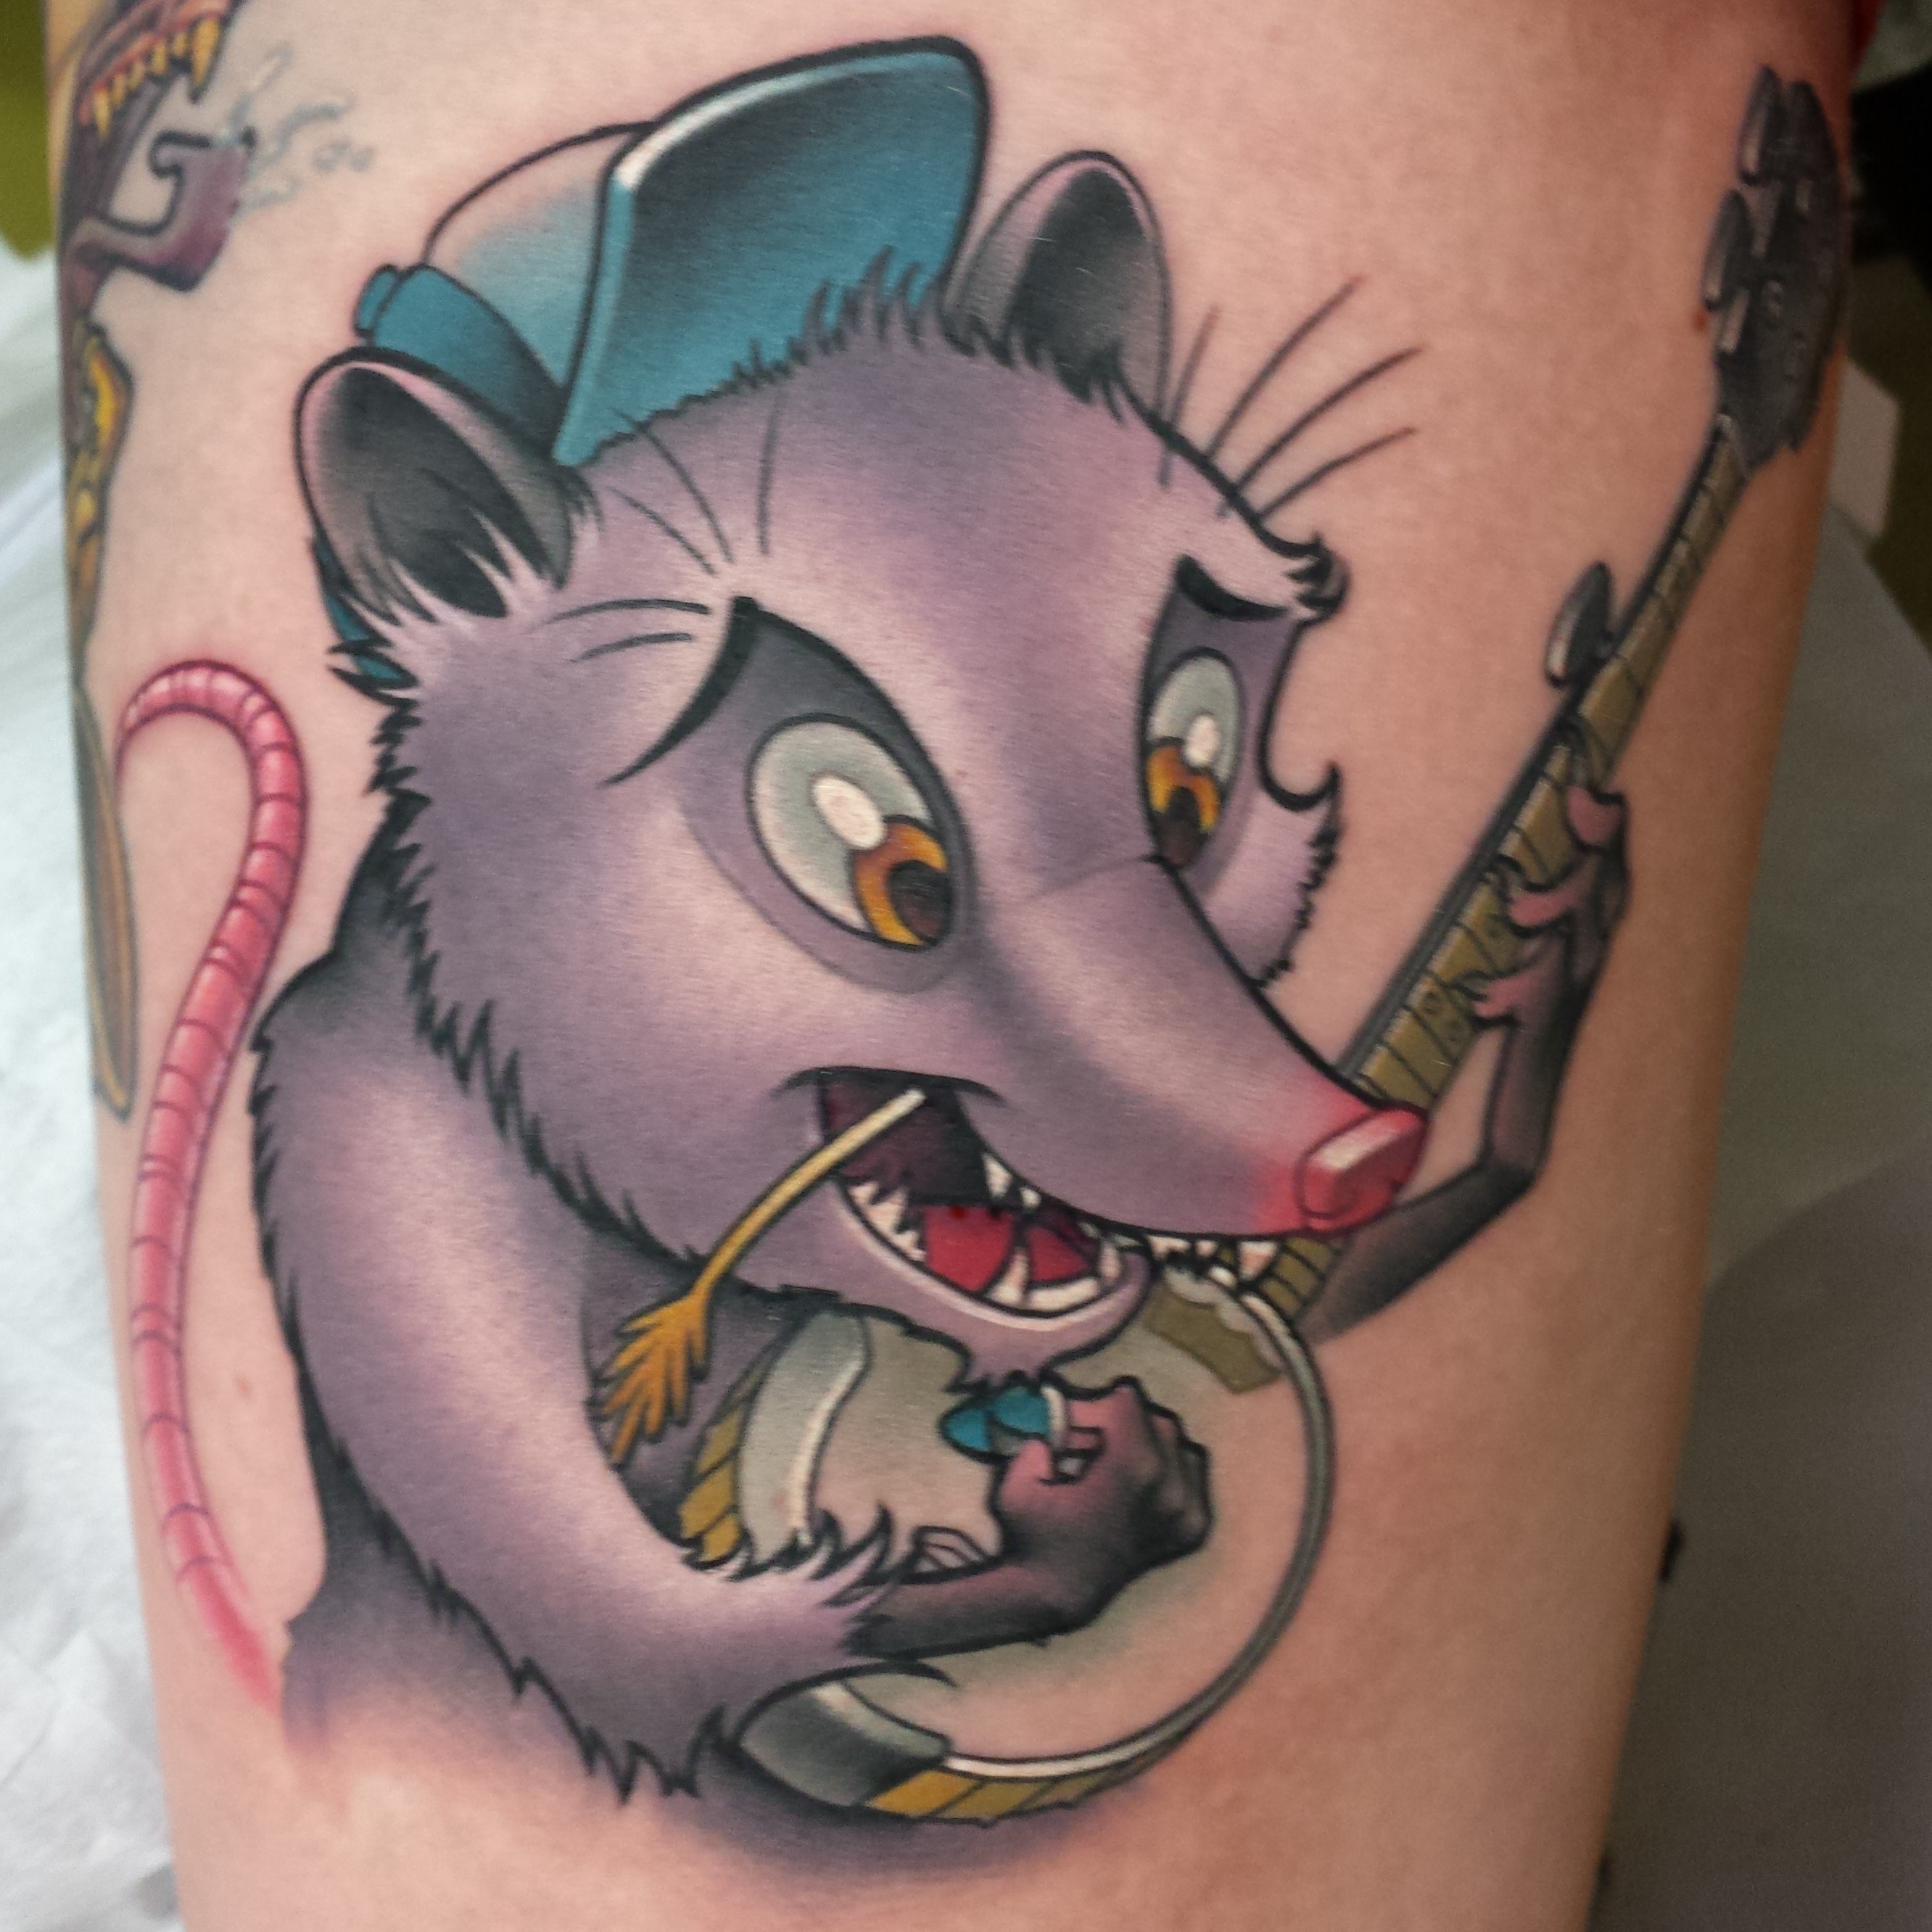 Hillbilly Opossum Tattoo by New England tattoo artist Cracker Joe Swider